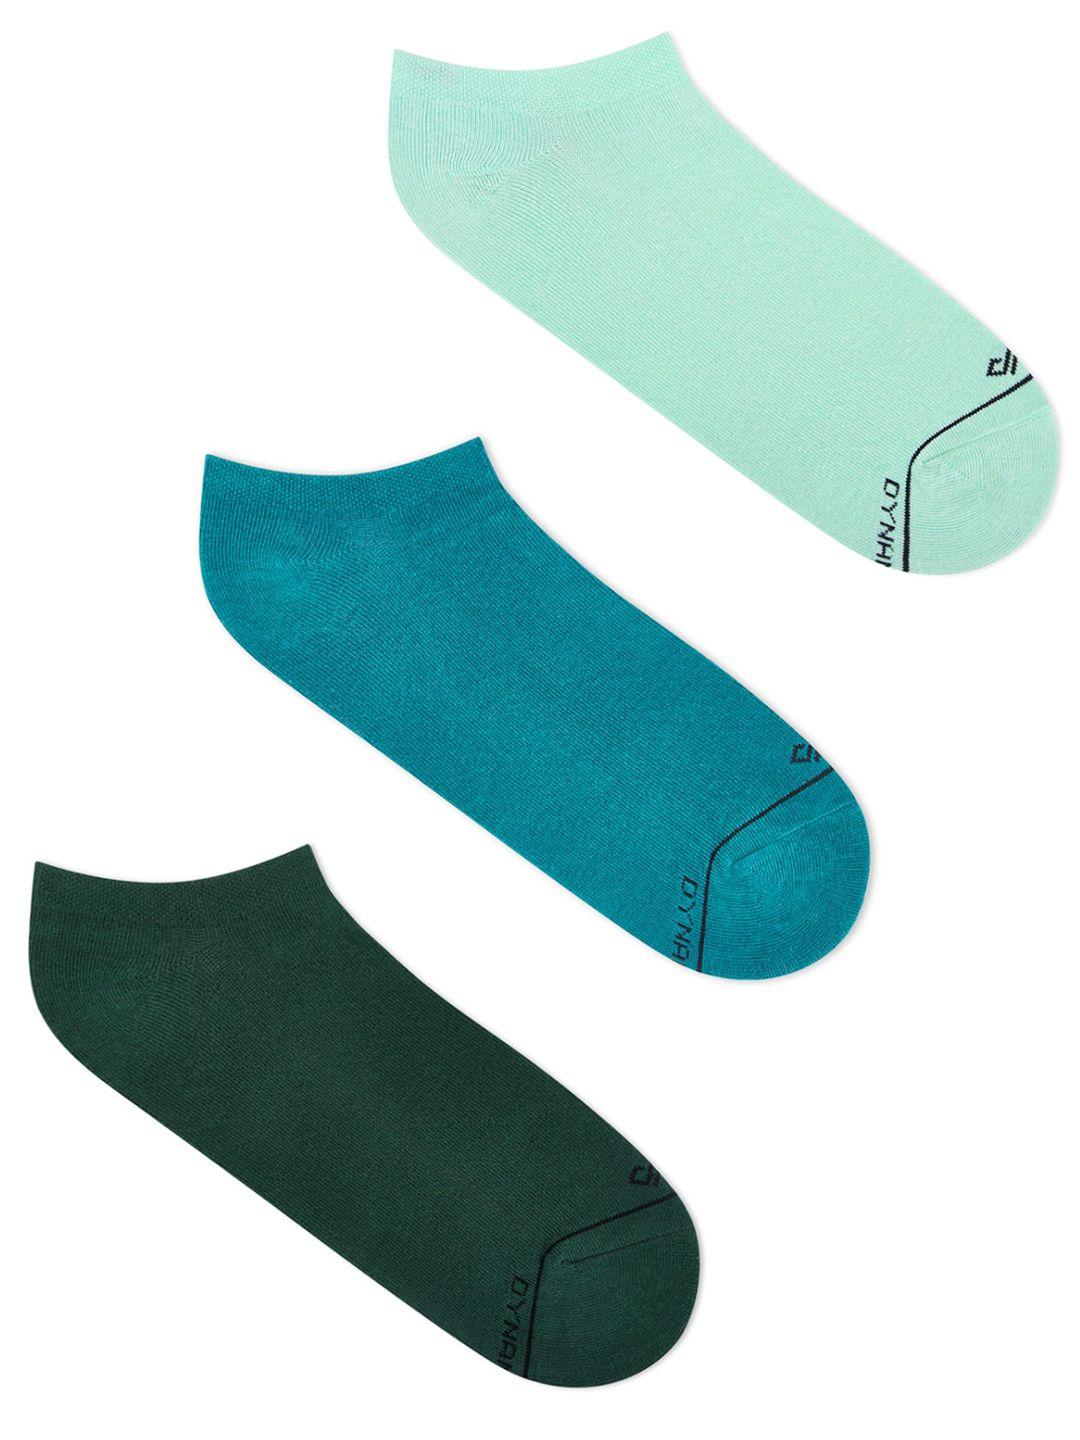 dynamocks pack of 3 ankle length socks